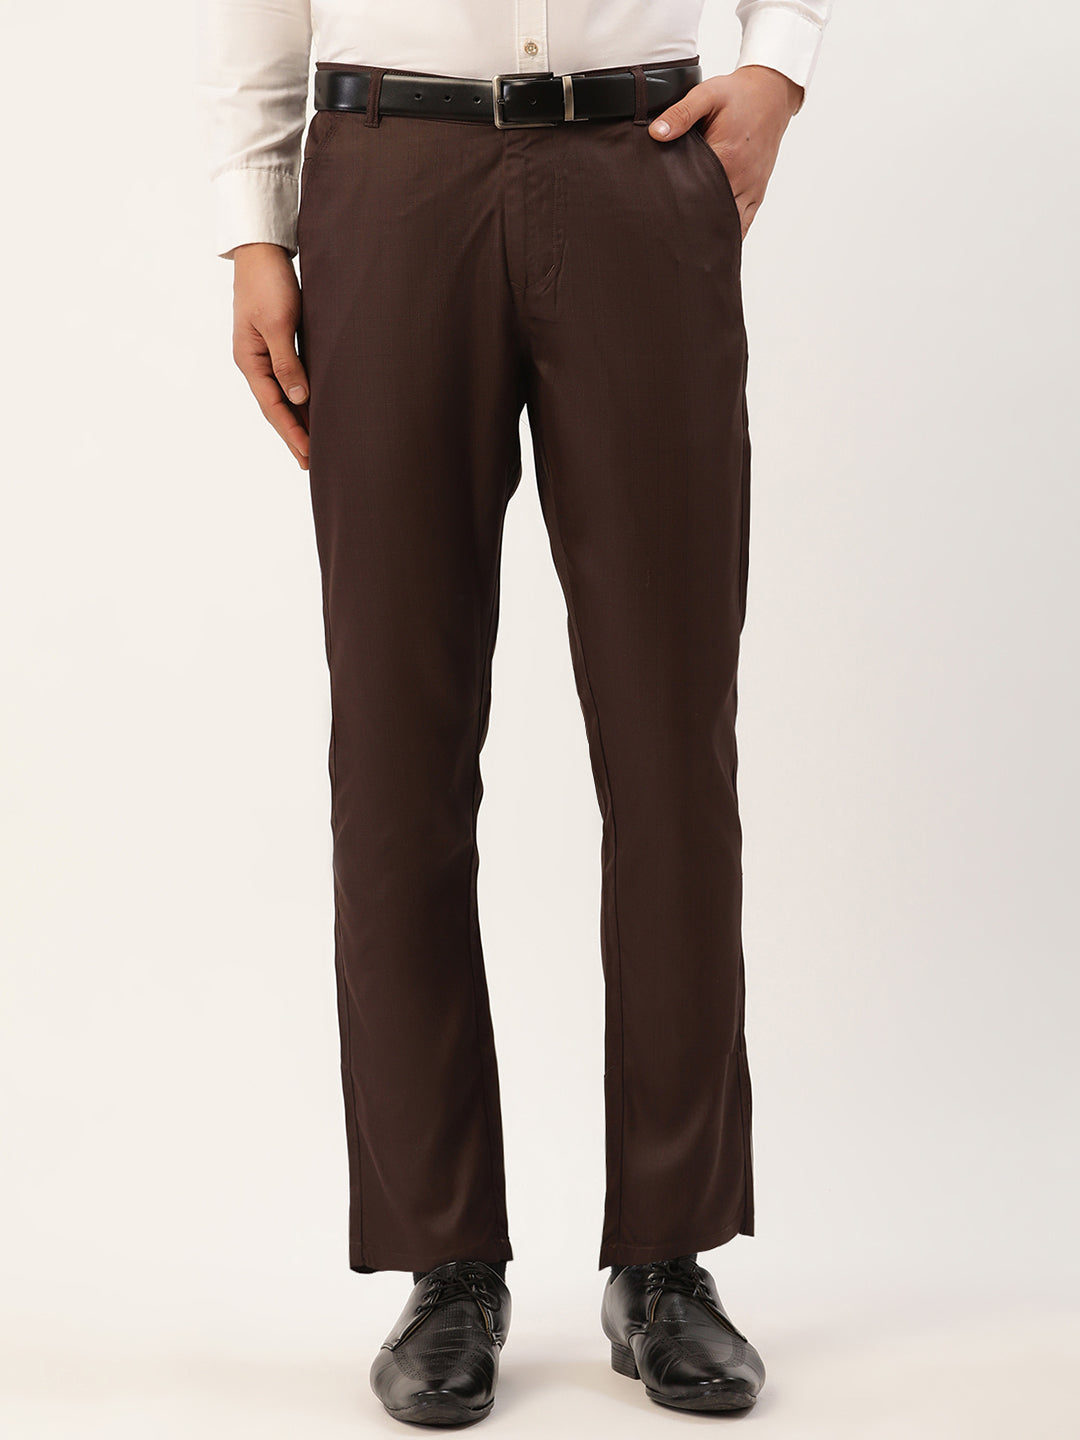 Pantaflat slim cotton-blend pants in brown - Loro Piana | Mytheresa